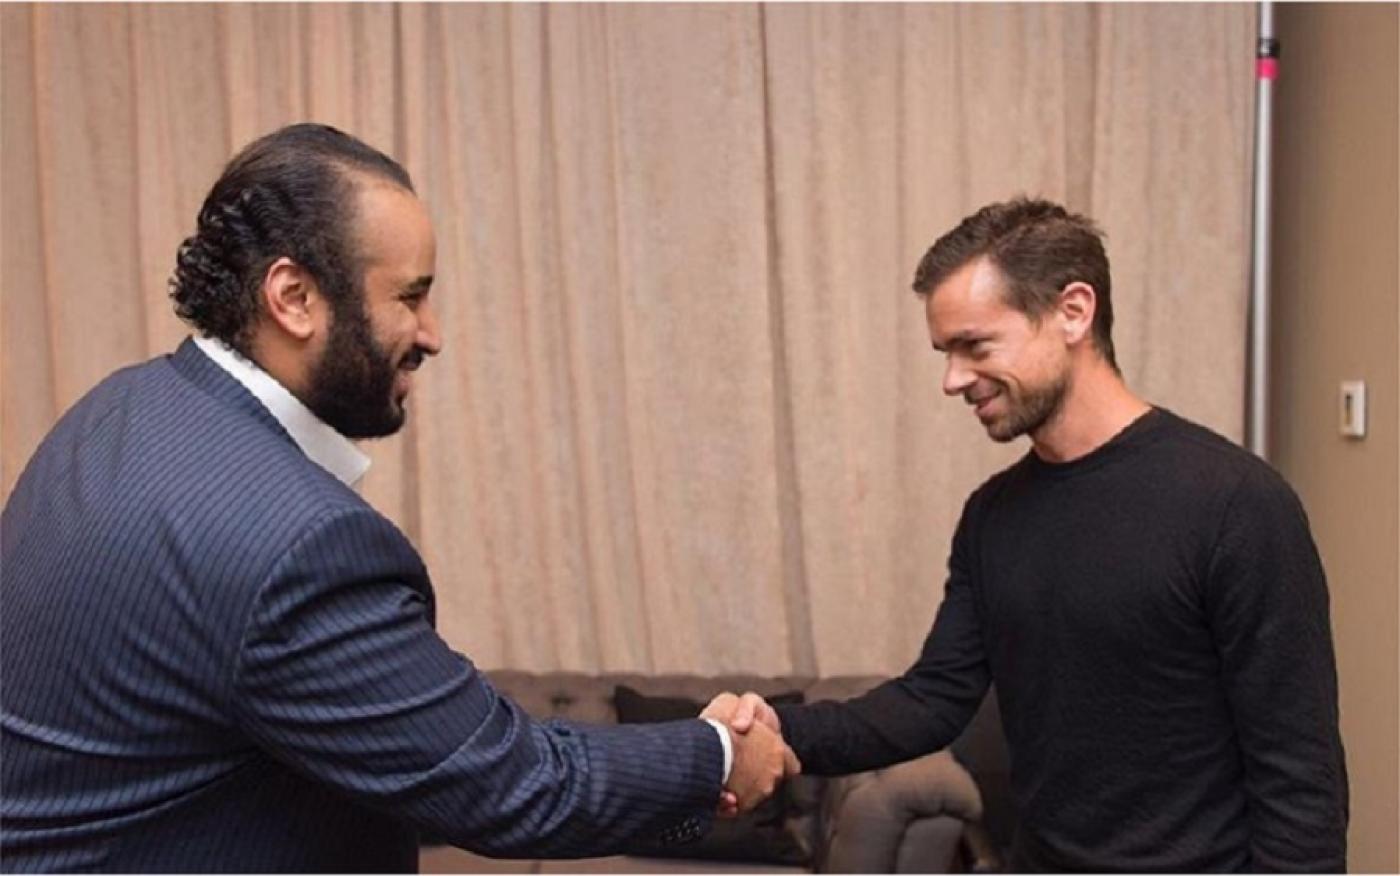 Jack Dorsey and Mohammed bin Salman shaking hands in photo posted by Bader al-Asaker in June 2016 (Instagram)